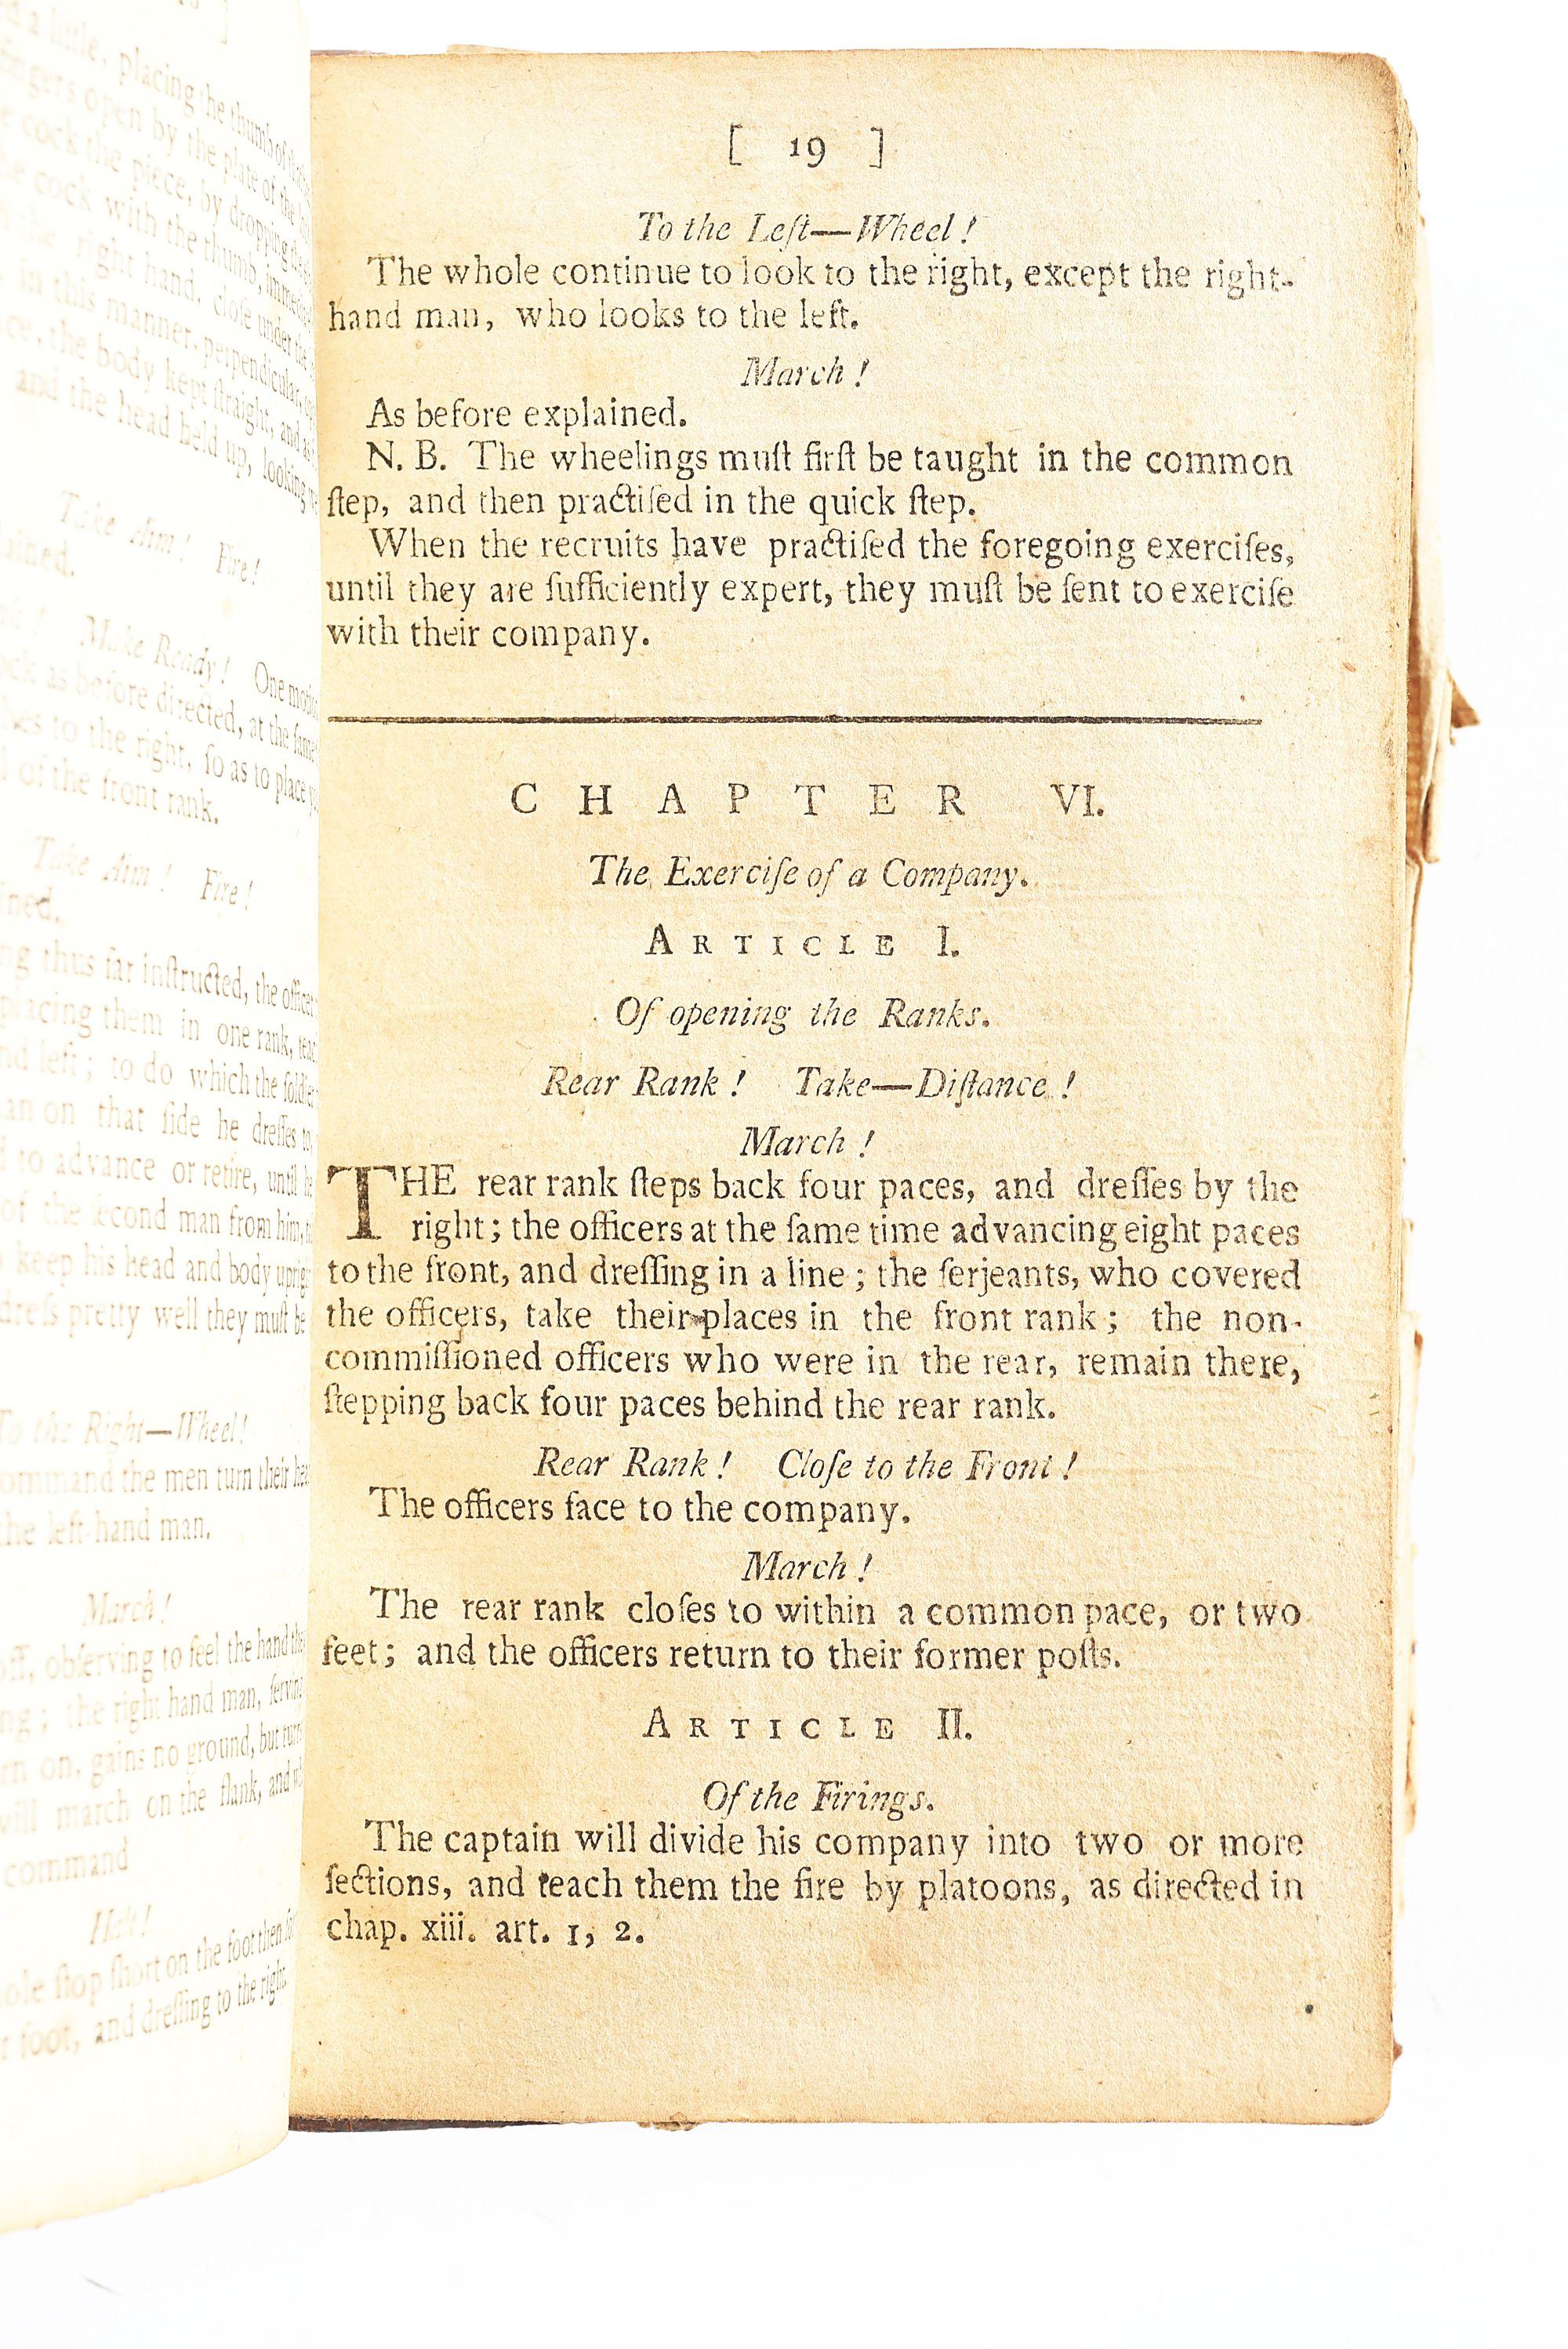 VON STEUBEN'S REGULATIONS FOR THE ORDER & DISCIPLINE OF THE TROOPS, CIRCA 1794.